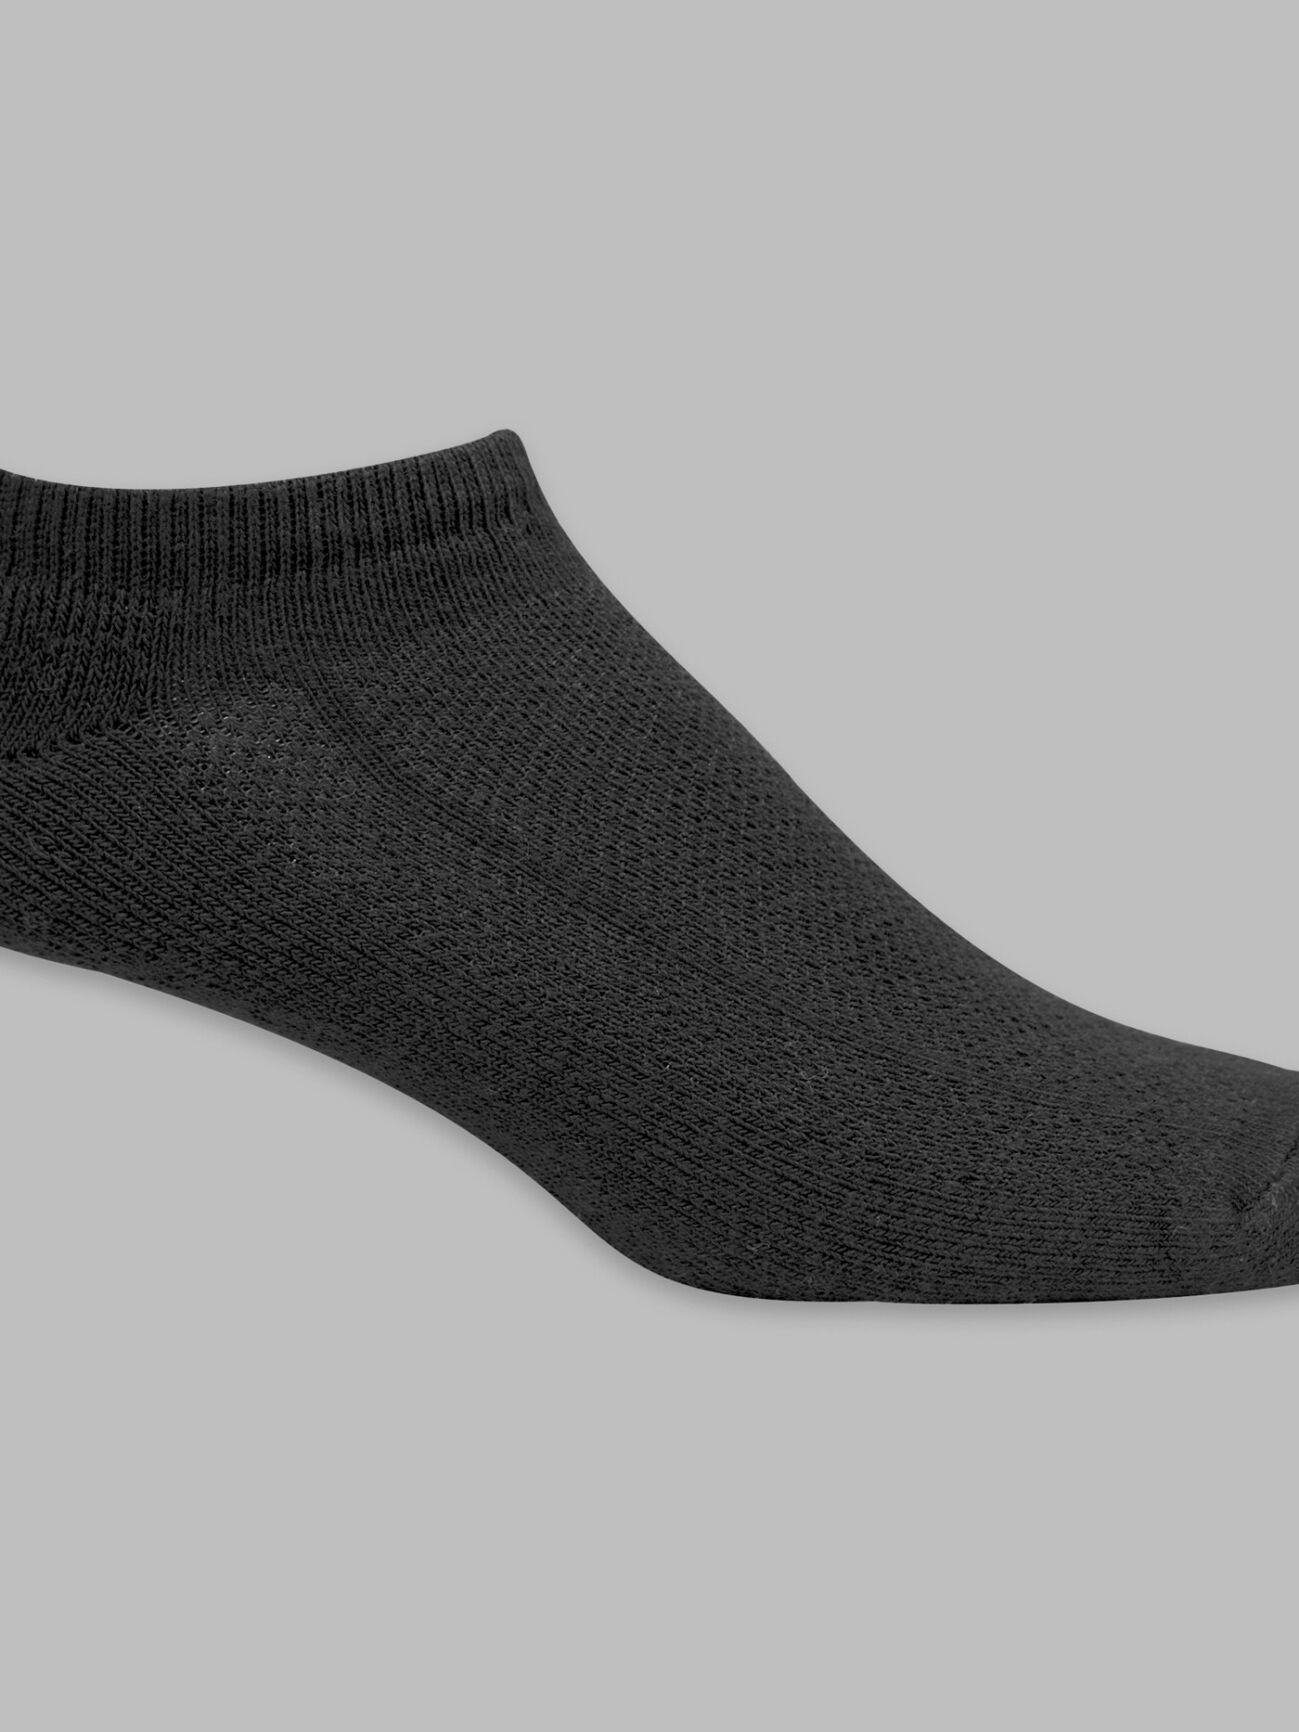 Men's Breathable No Show Socks Black, 6 Pack, Size 12-15 BLACK